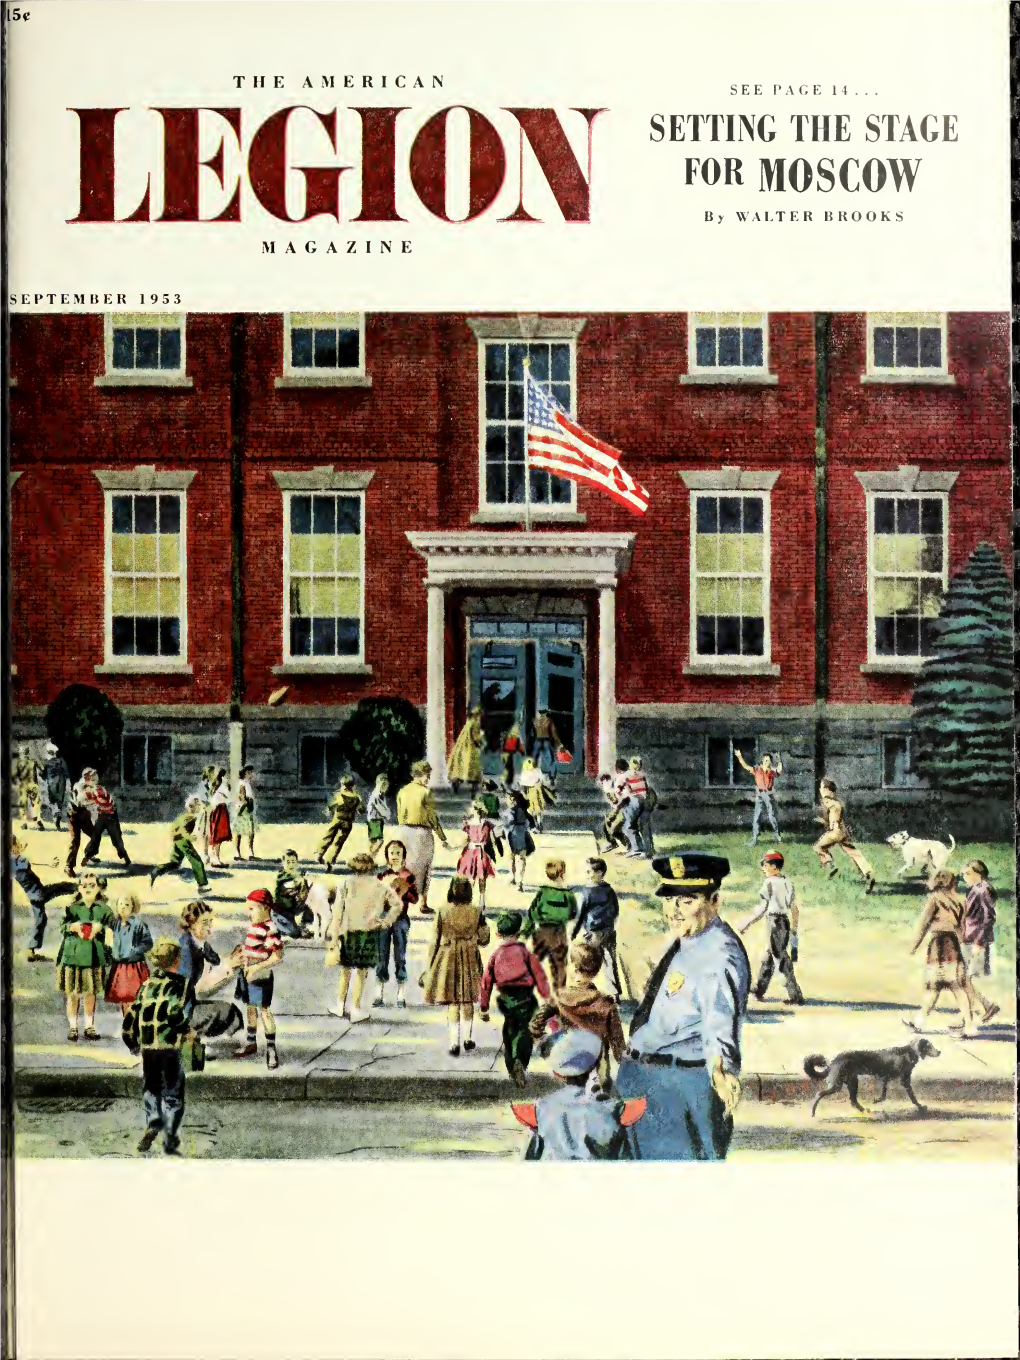 The American Legion Magazine [Volume 55, No. 3 (September 1953)]